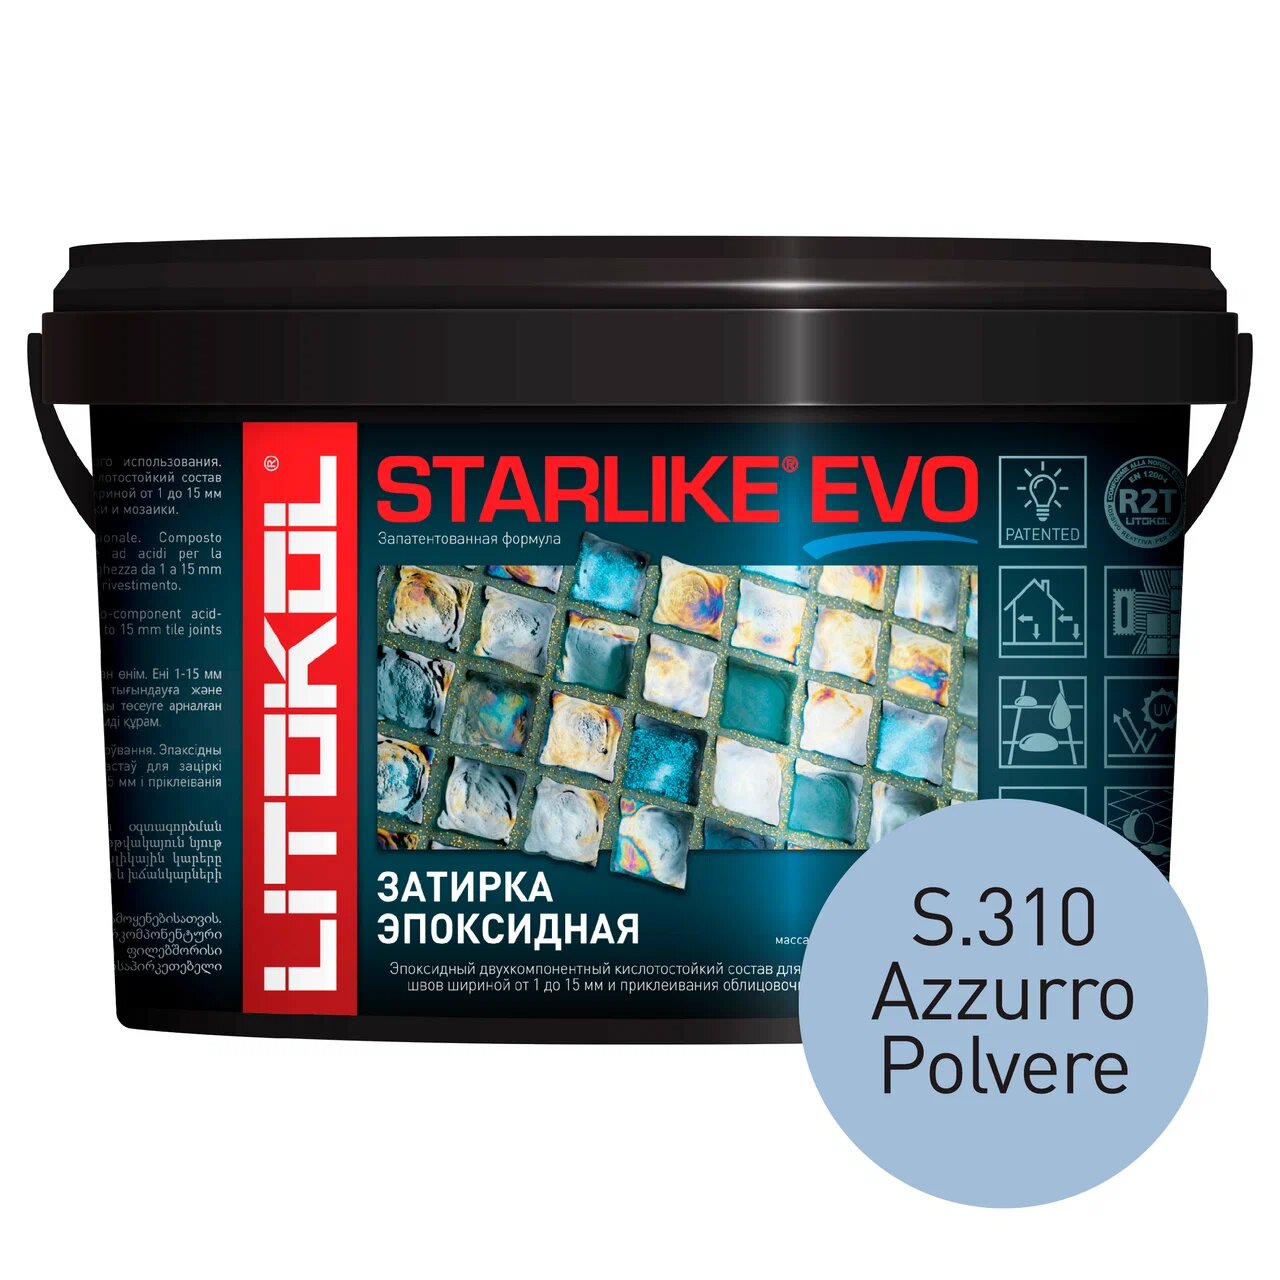 Затирка LITOKOL STARLIKE EVO S.310 AZZURRO POLVERE, 1 кг затирка litokol starlike evo s 310 azzurro polvere 1 кг